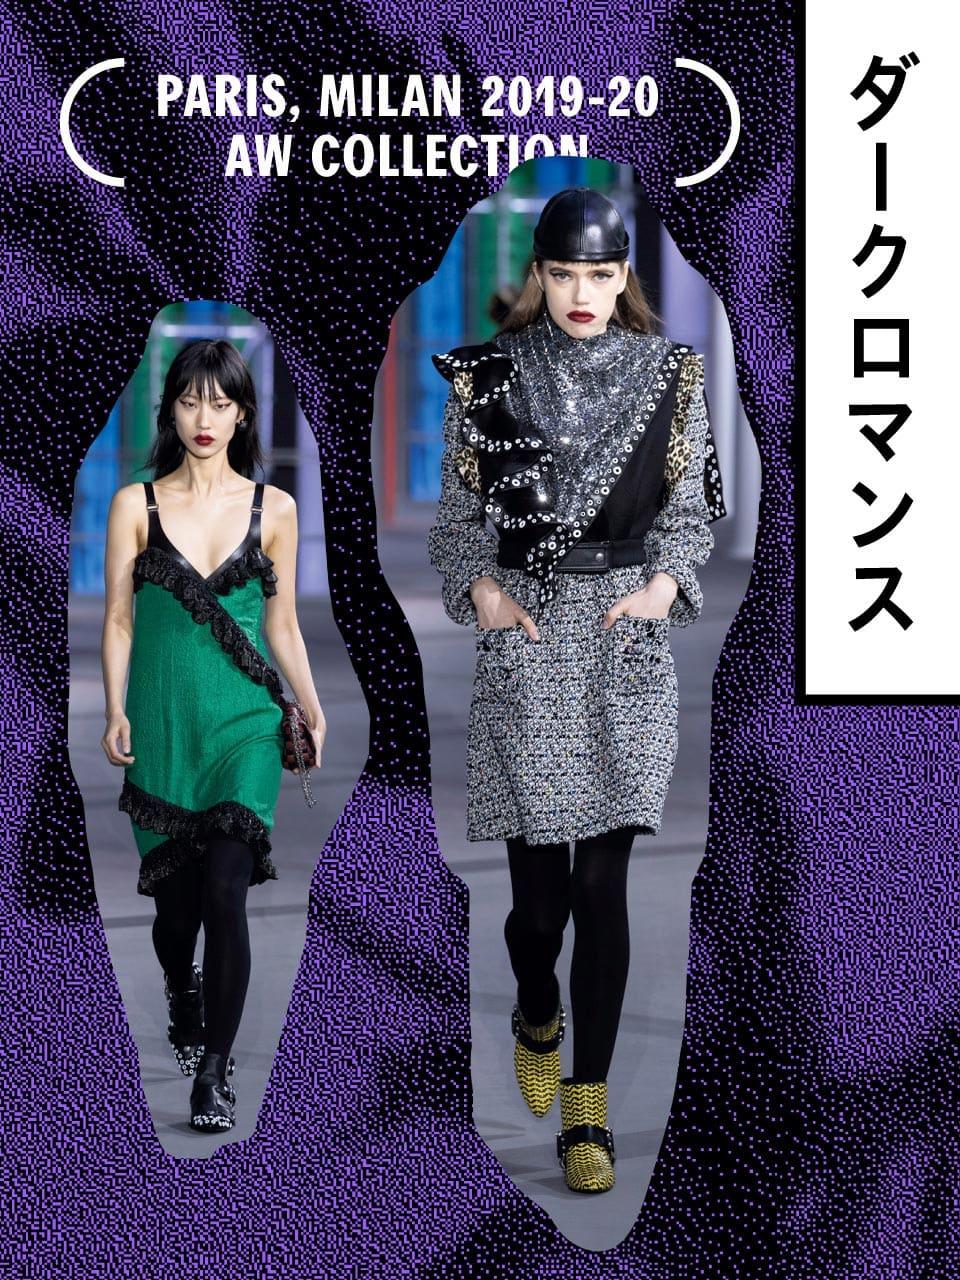 GINZAが厳選。最新コレクションで目を引いた「ダークロマンス」な装い